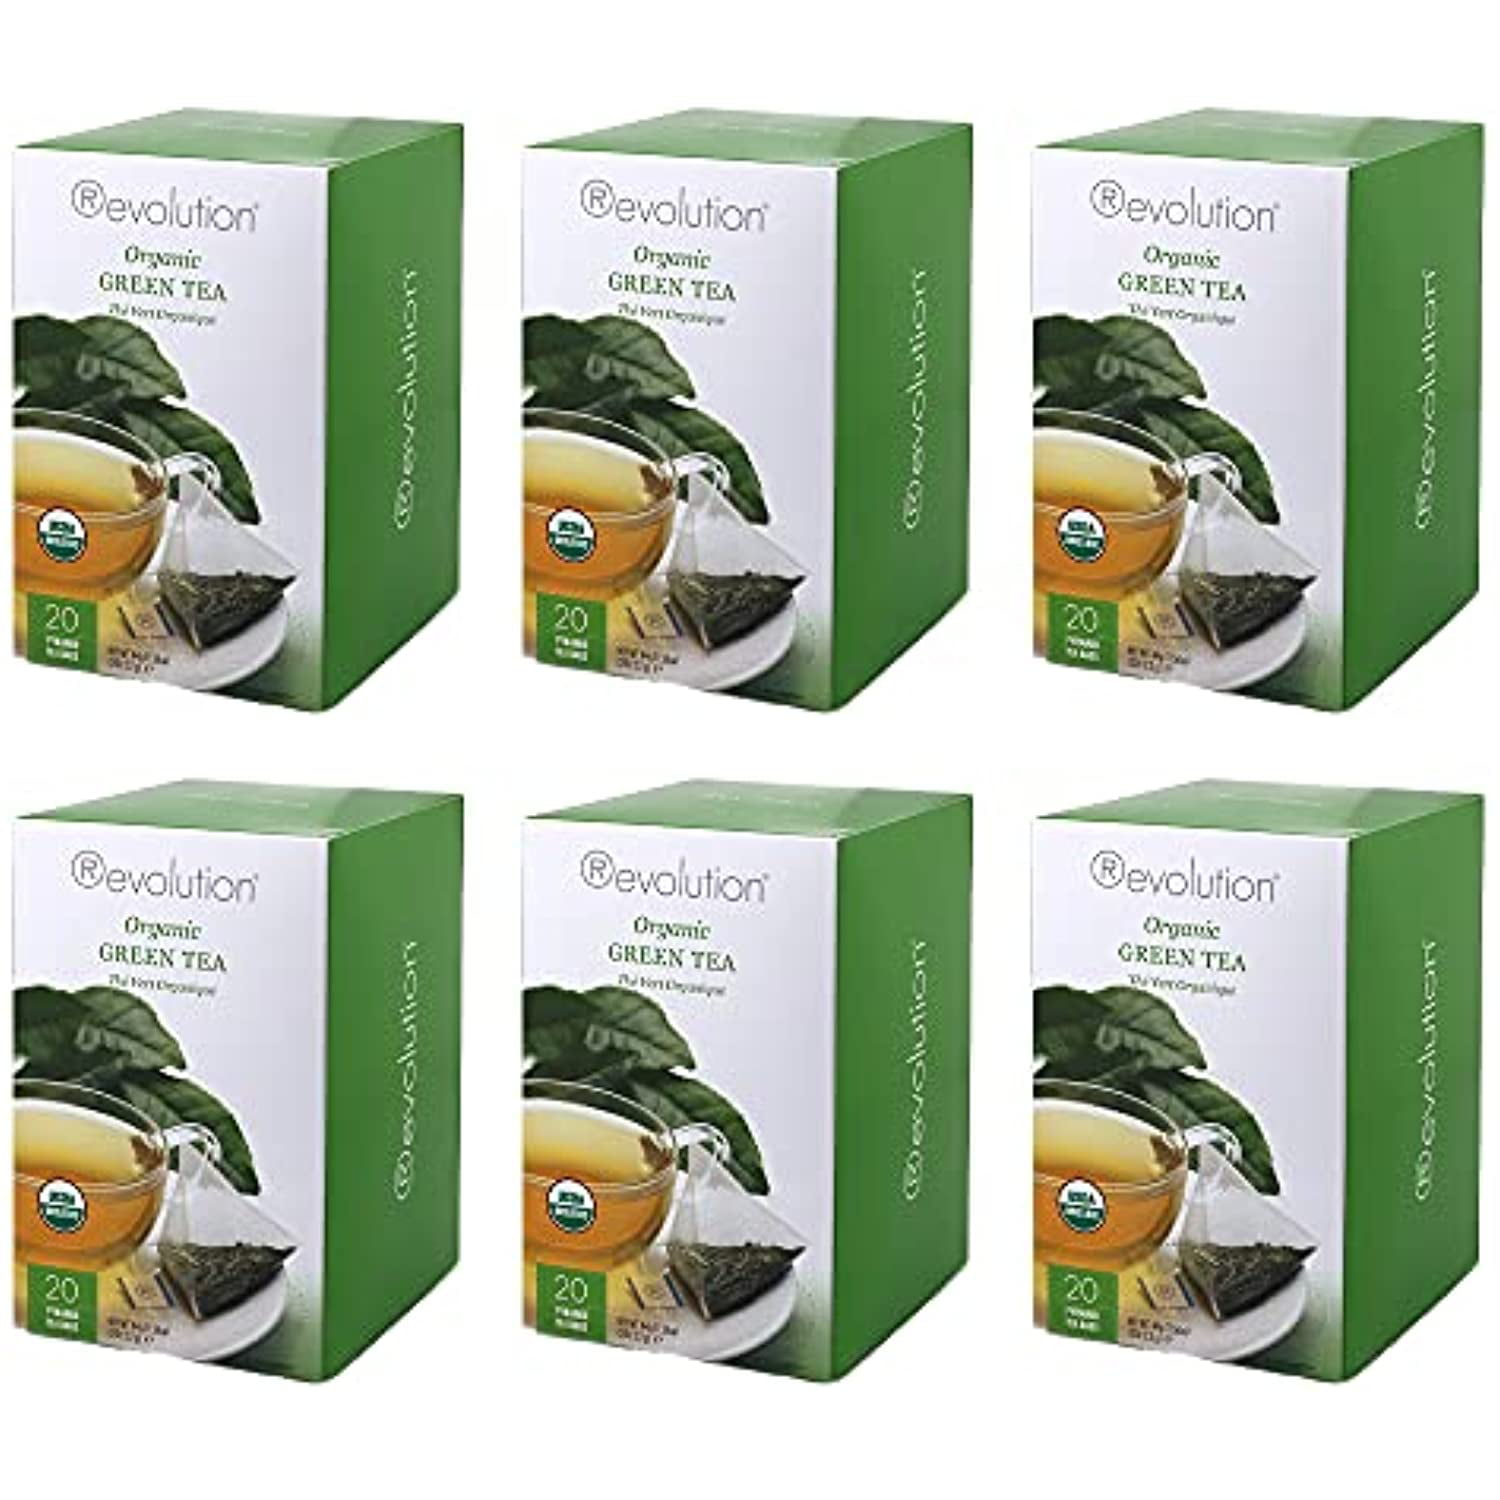 How to Make Iced Green Tea – Revolution Tea